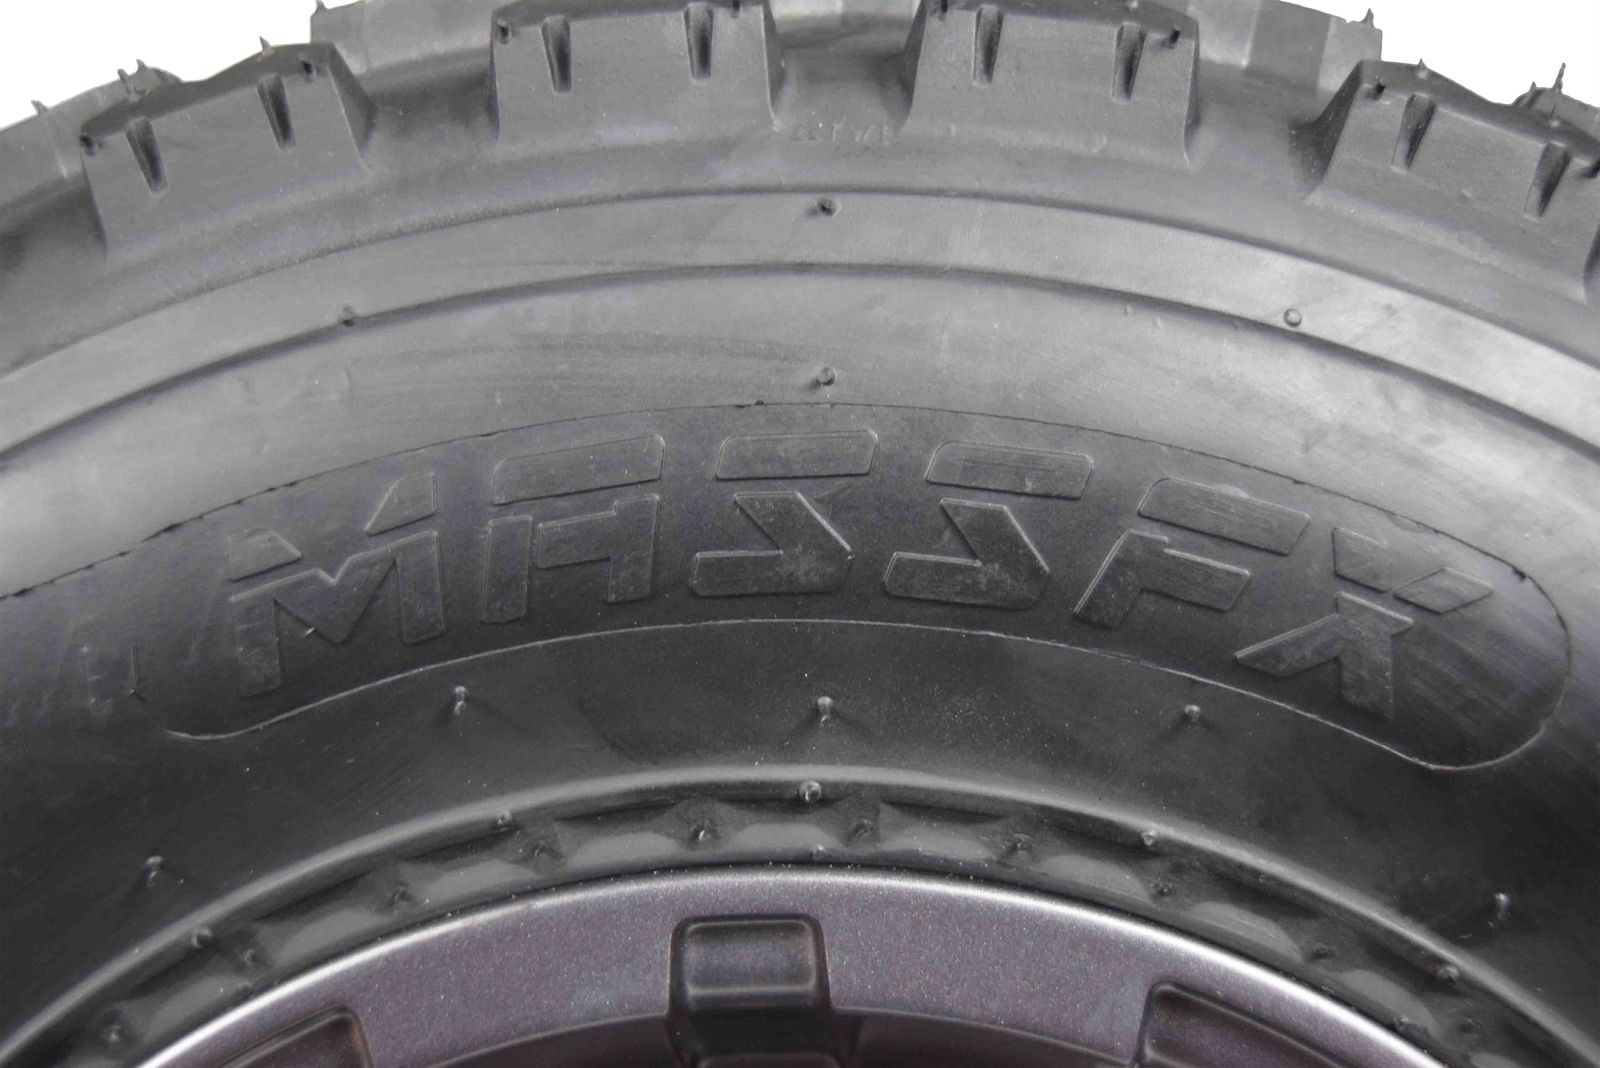 MASSFX 22x7-10 ATV Front Tire & 10x5 4/156 Gun Metal Wheel Kit 22x7x10 (2 Pack)